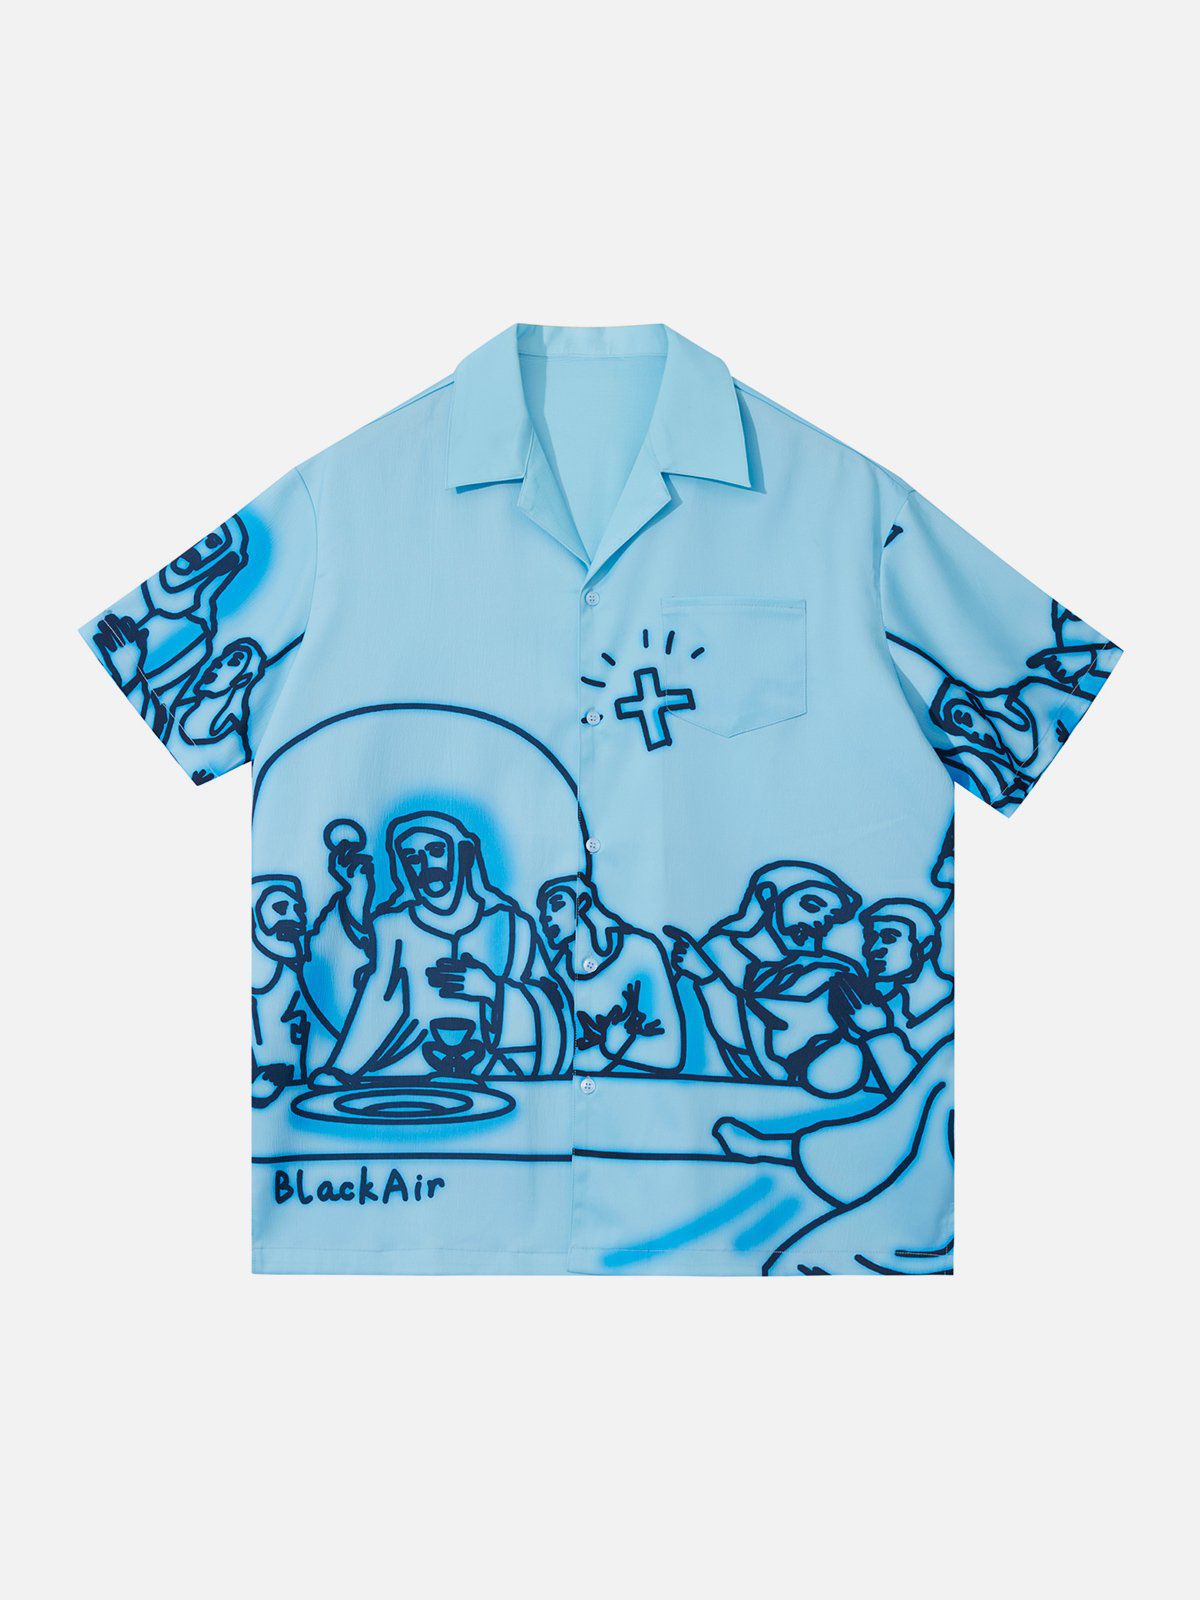 Eprezzy® - "Last Supper" Line Caricature Short Sleeve Shirts Streetwear Fashion - eprezzy.com